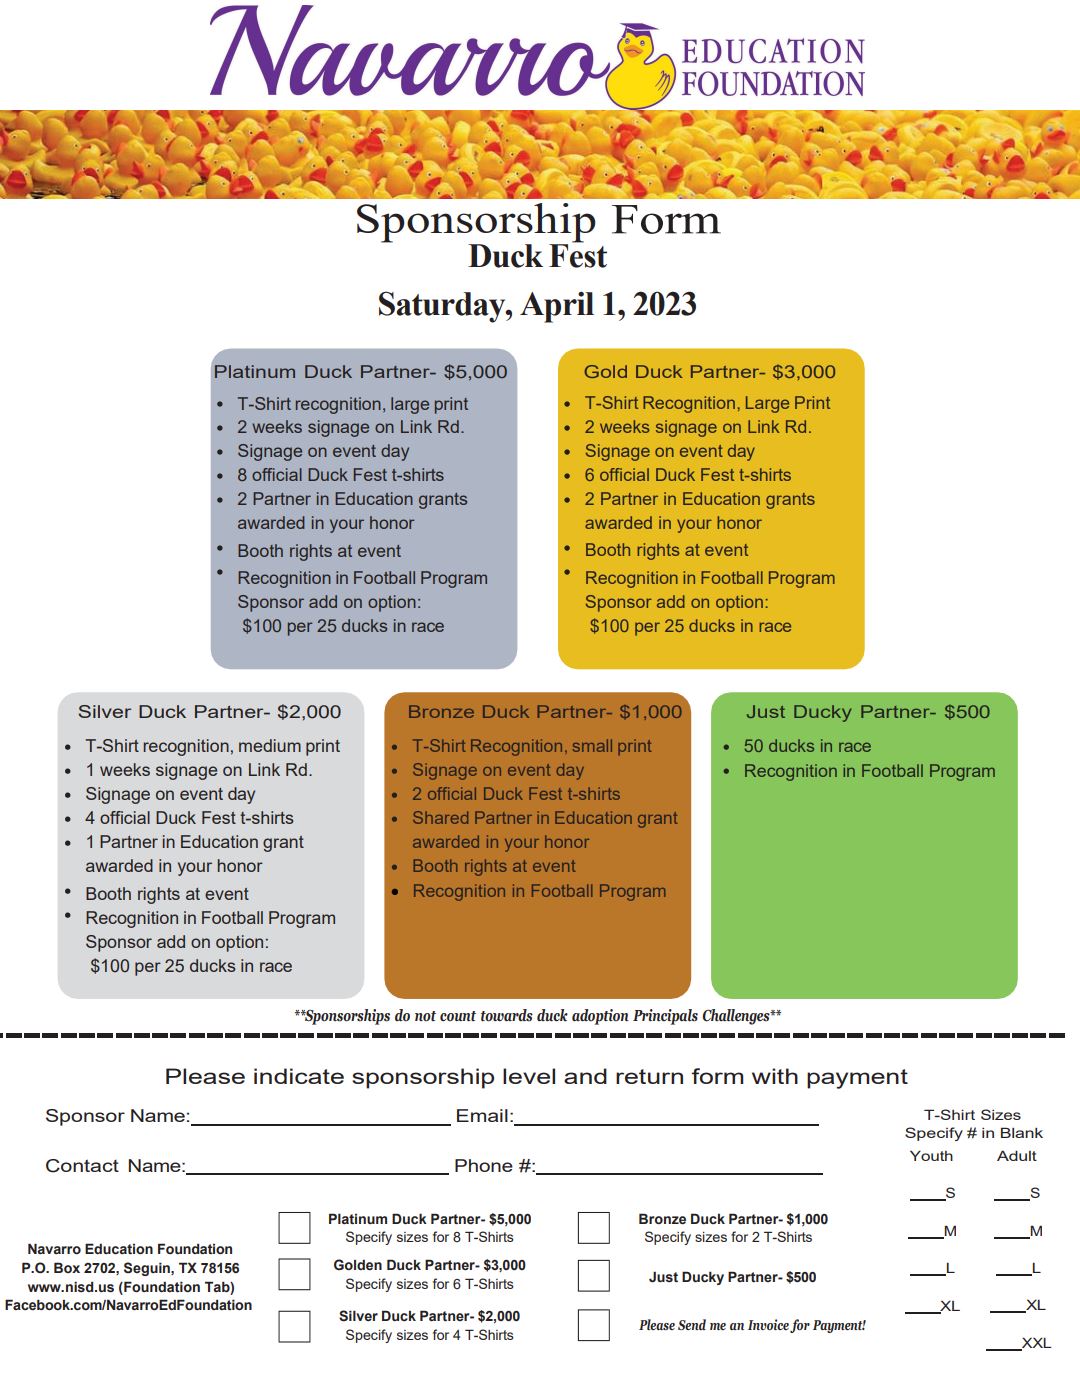 NEF Duckfest Sponsorship Form 2023